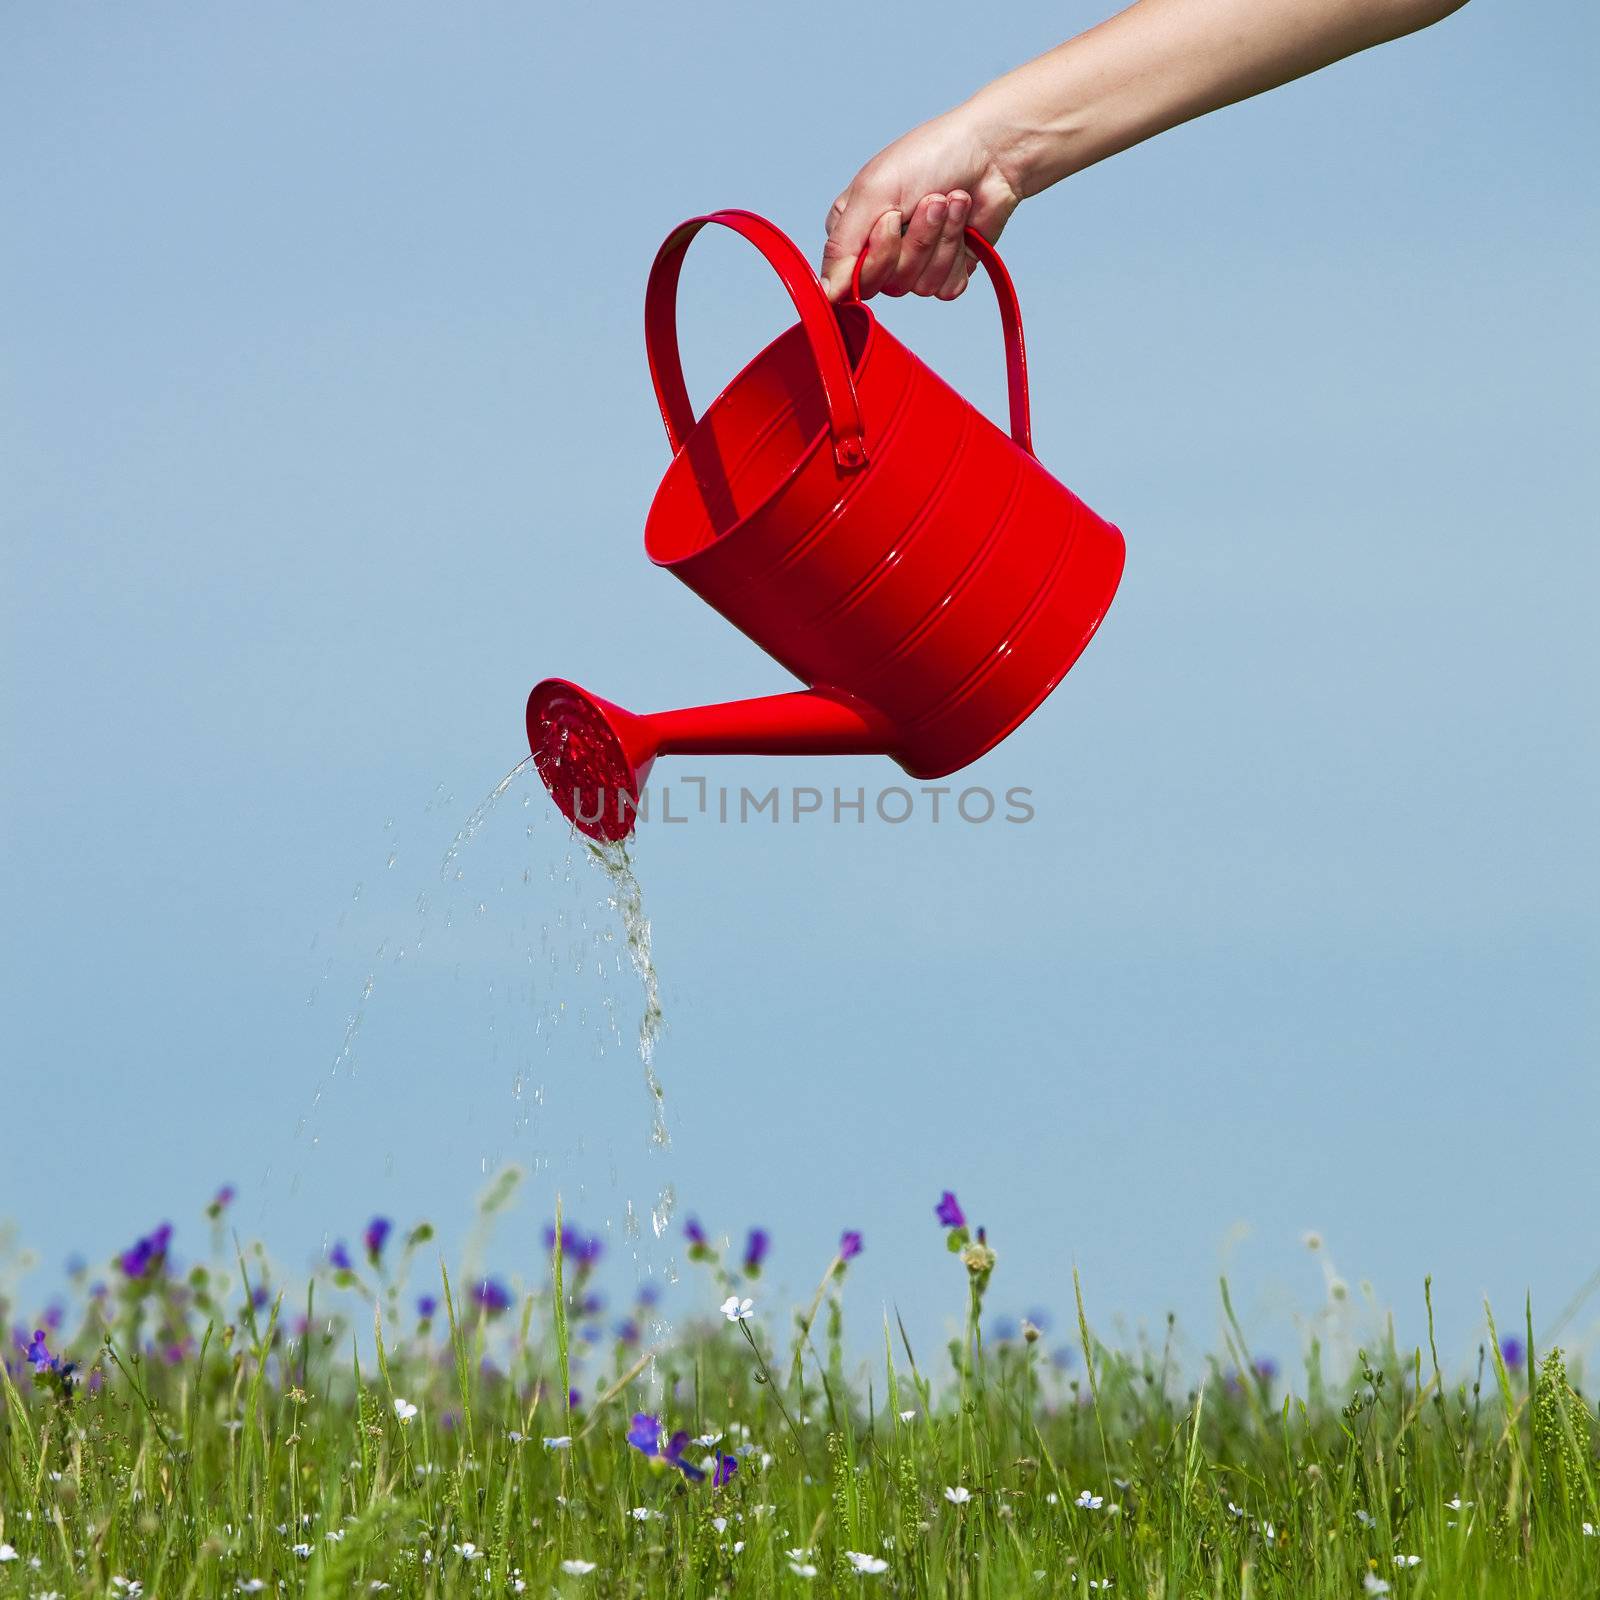 Watering the flowers by Iko